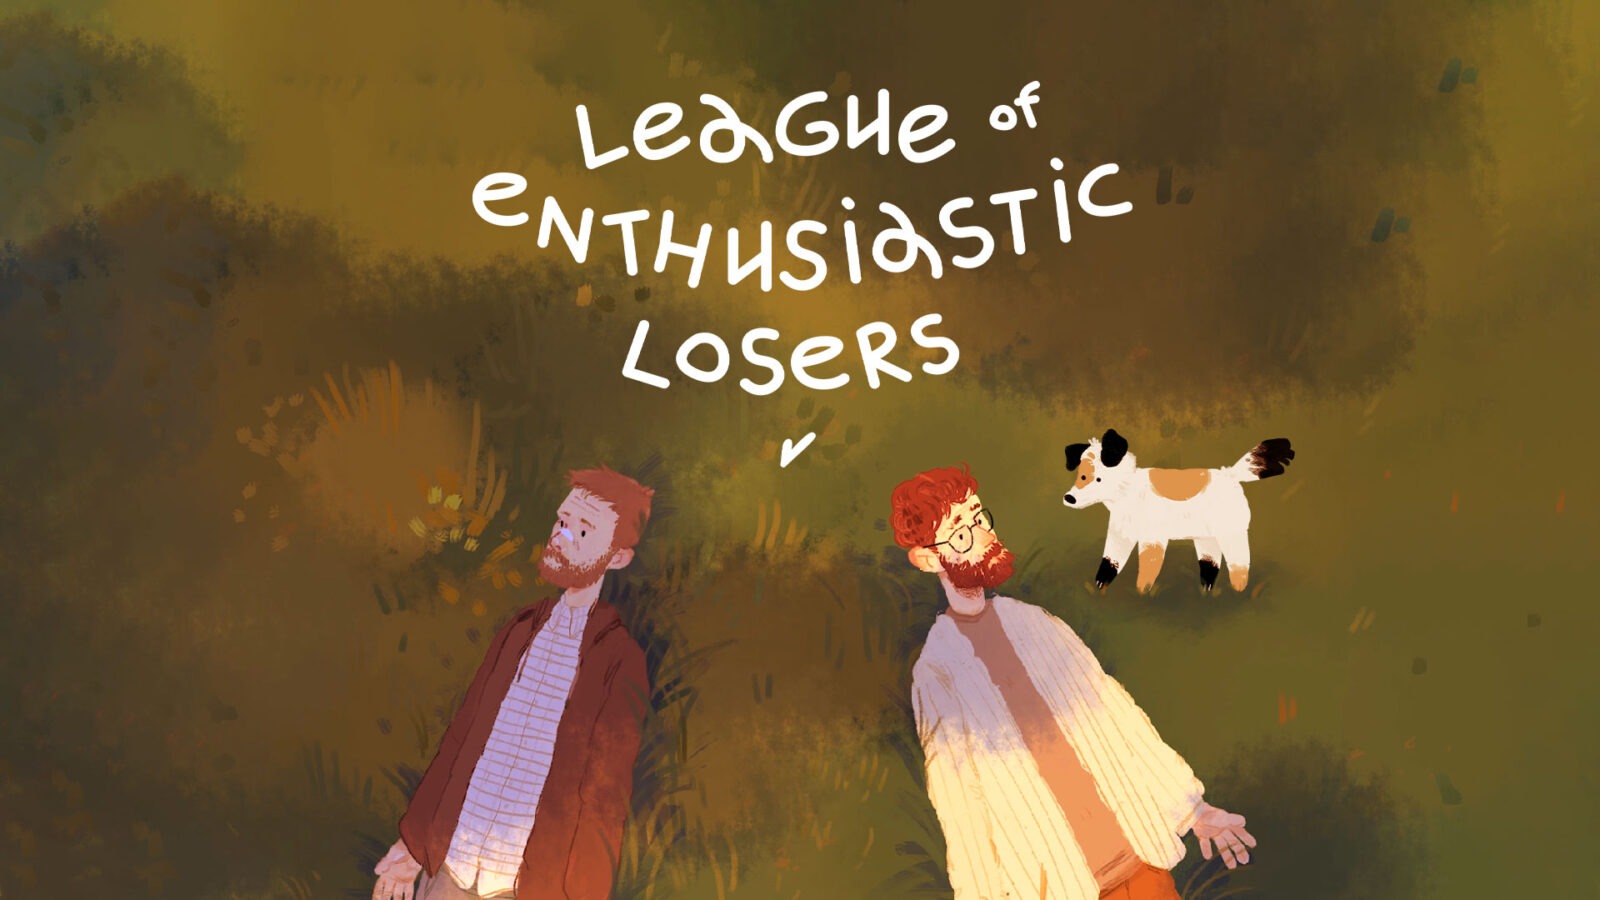 O jogo de aventura League of Enthusiastic Losers chega ao Swicth esta semana